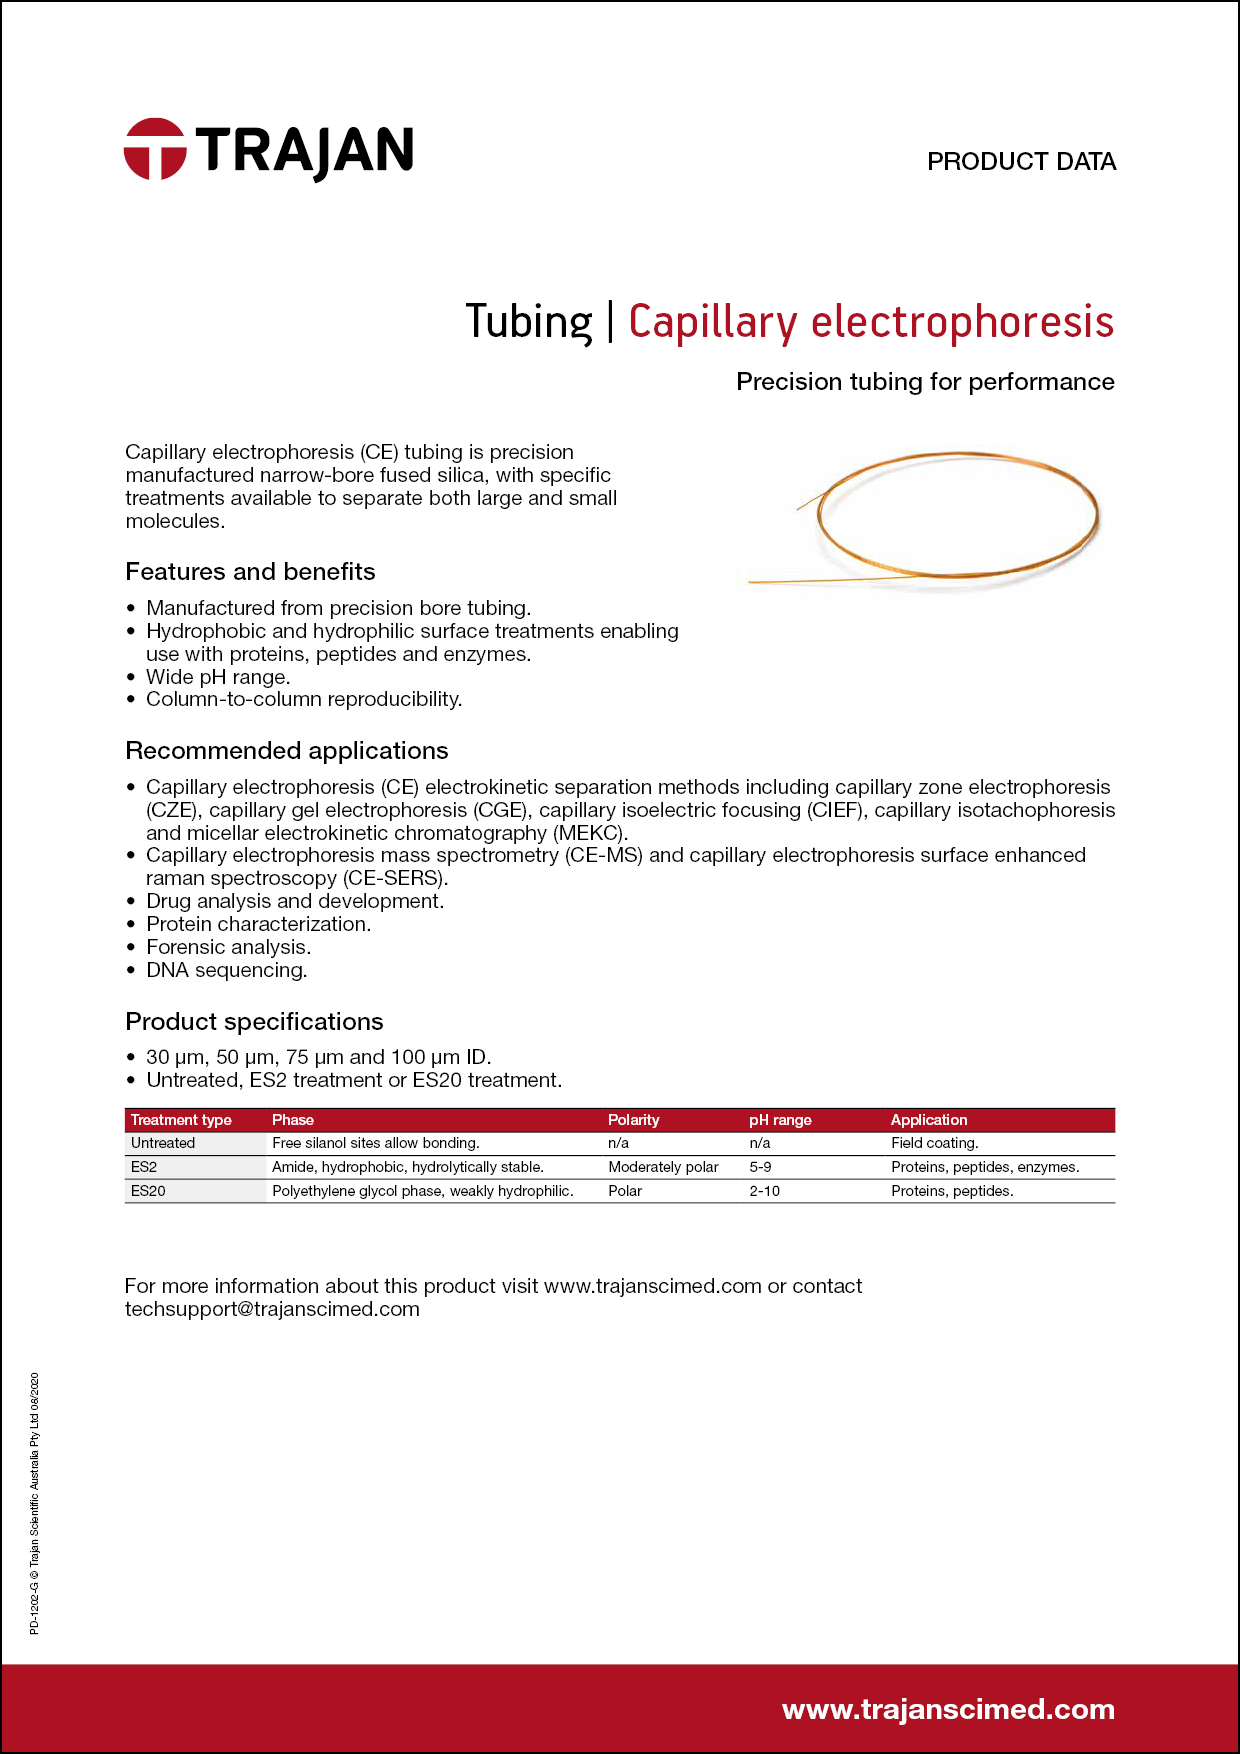 Product Data Sheet - Capillary electrophoresis tubing